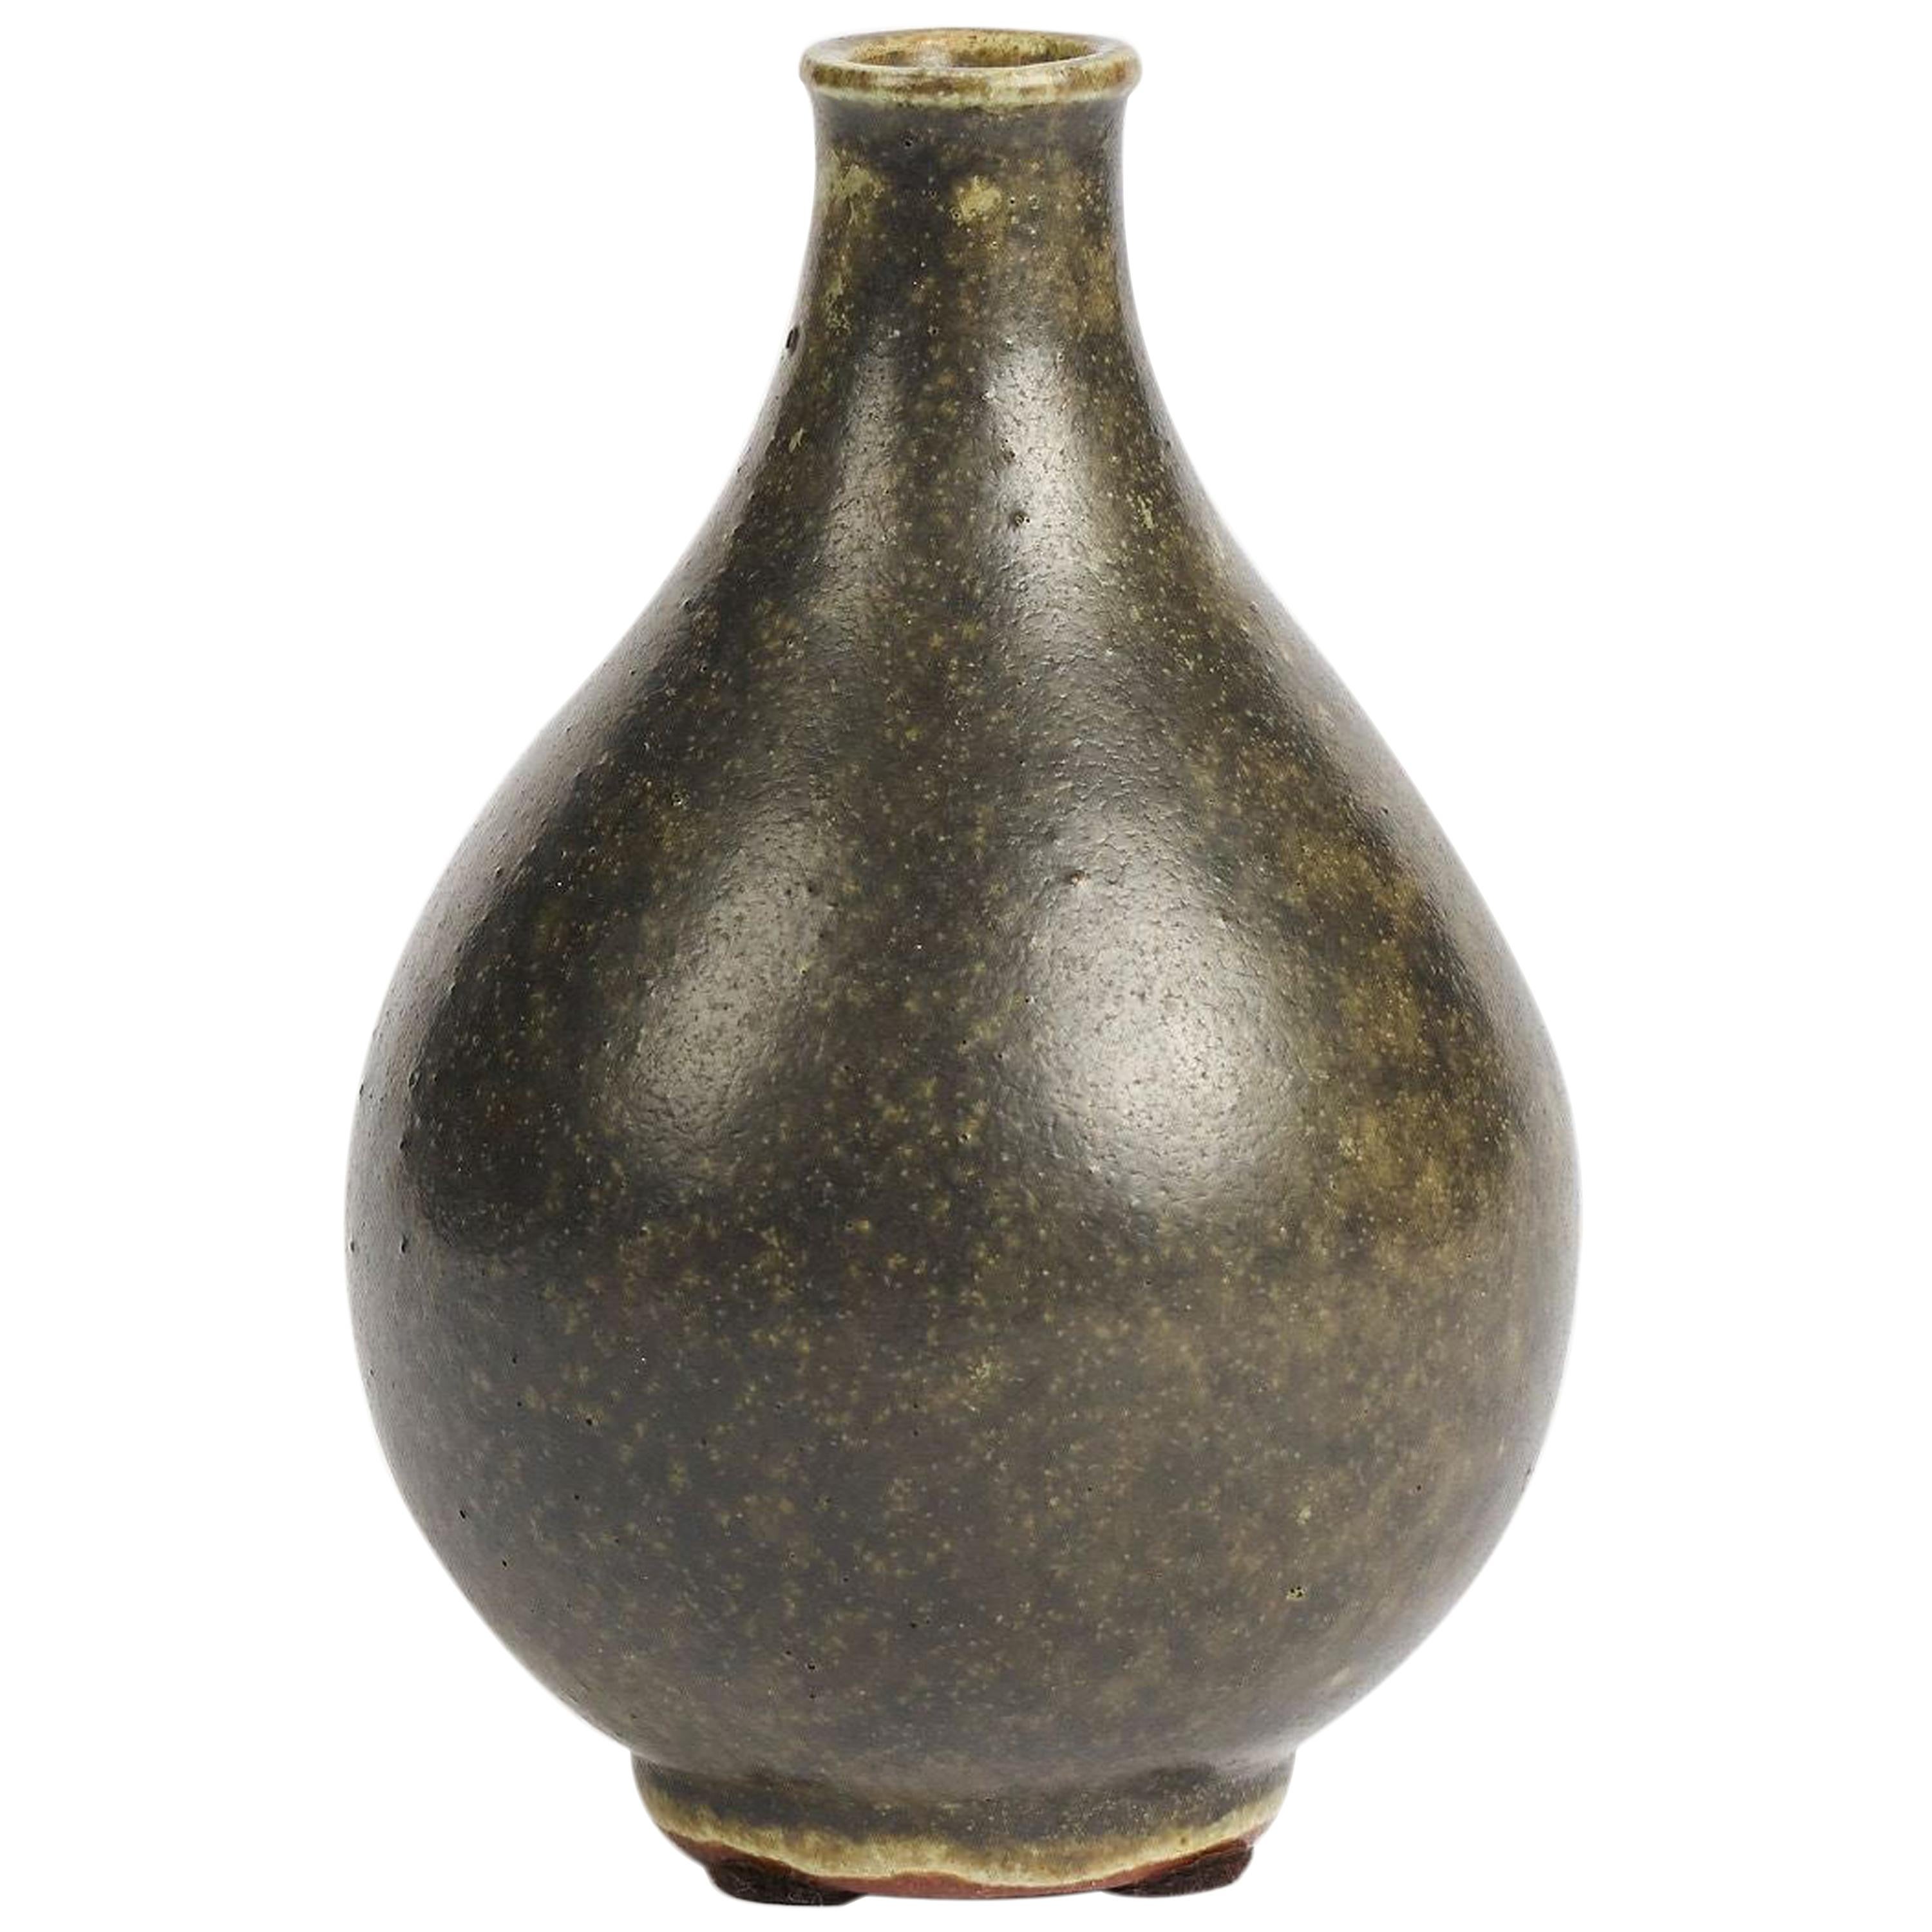 Arne Bang, Green and Grey Glazed Ceramic Vase, Denmark, 1930s